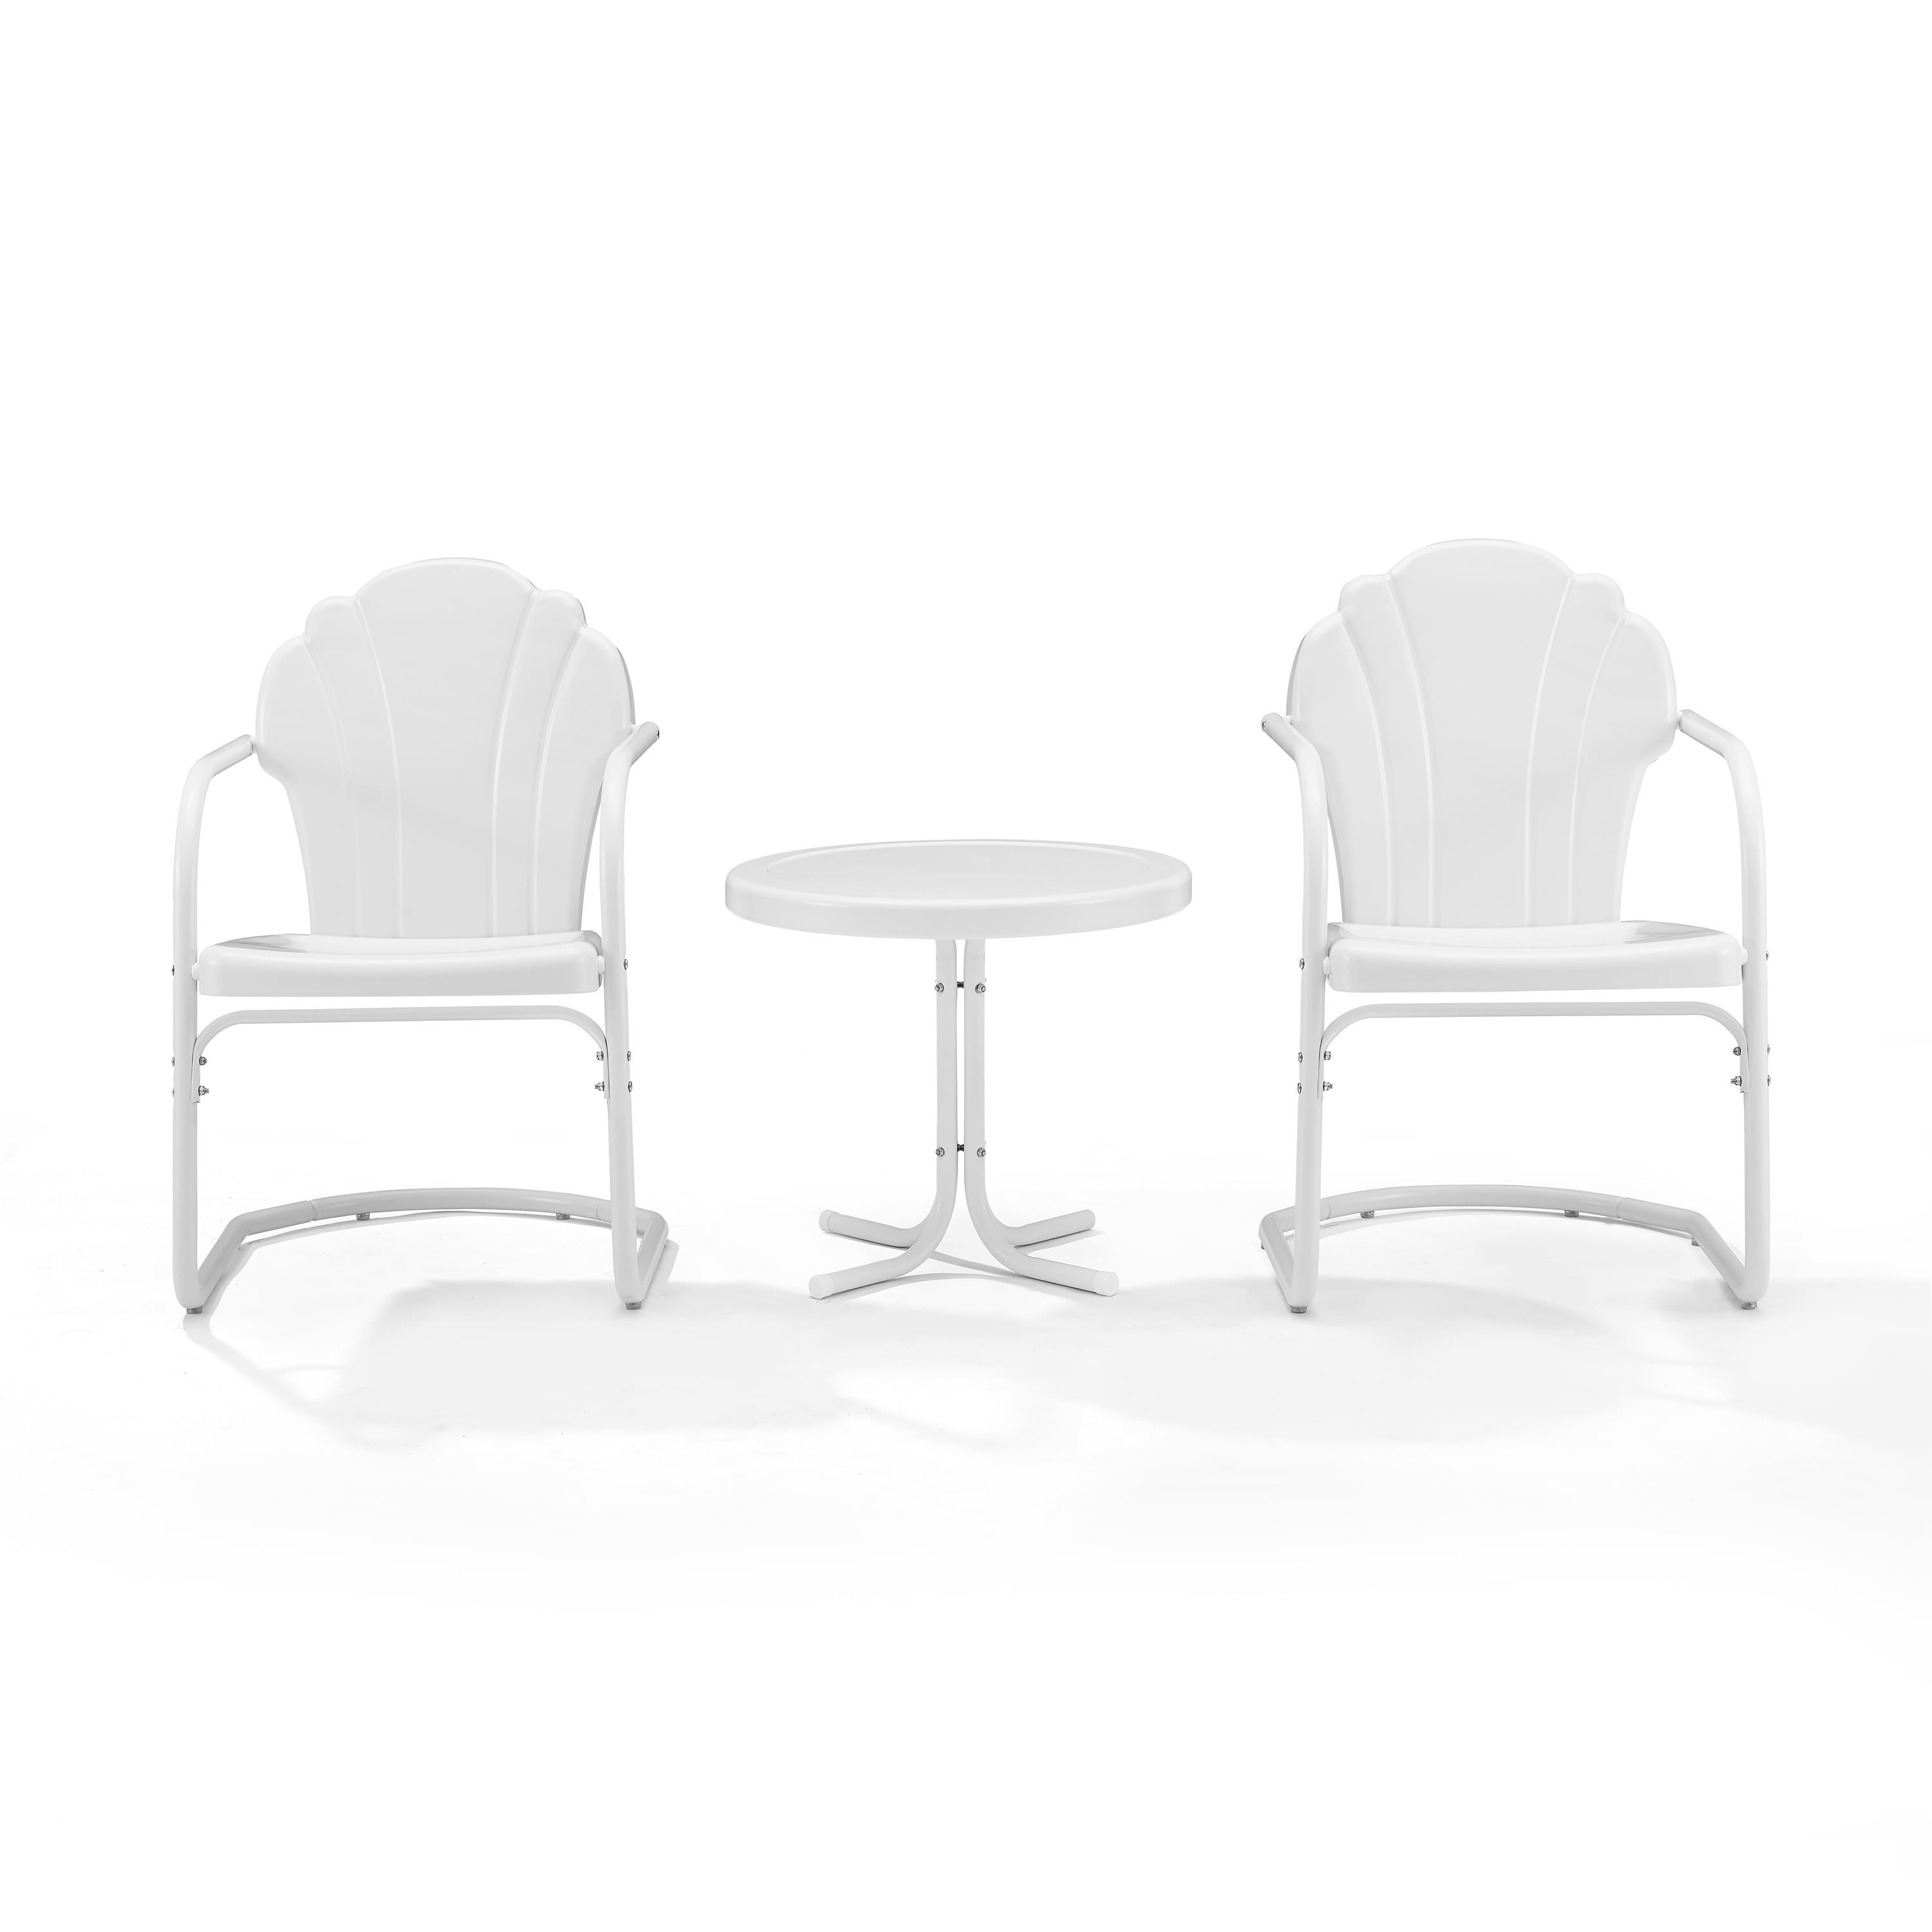 Crosley Furniture Tulip 3 Piece 22"Round Metal Patio Conversation Set in White - image 5 of 7